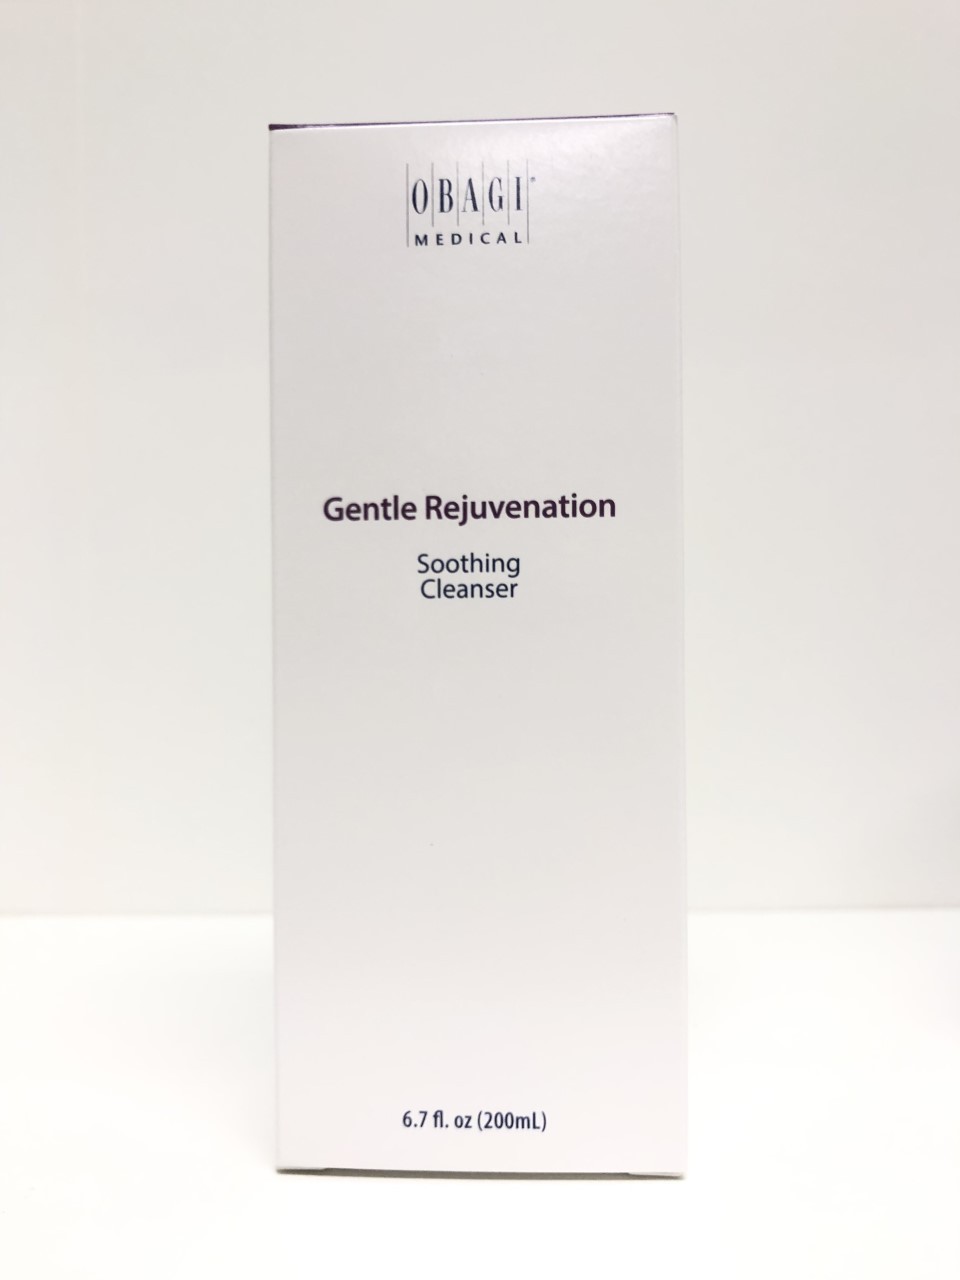 Obagi Gentle Rejuvenation Soothing Cleanser 6.7 oz Brand New in Box - $20.00